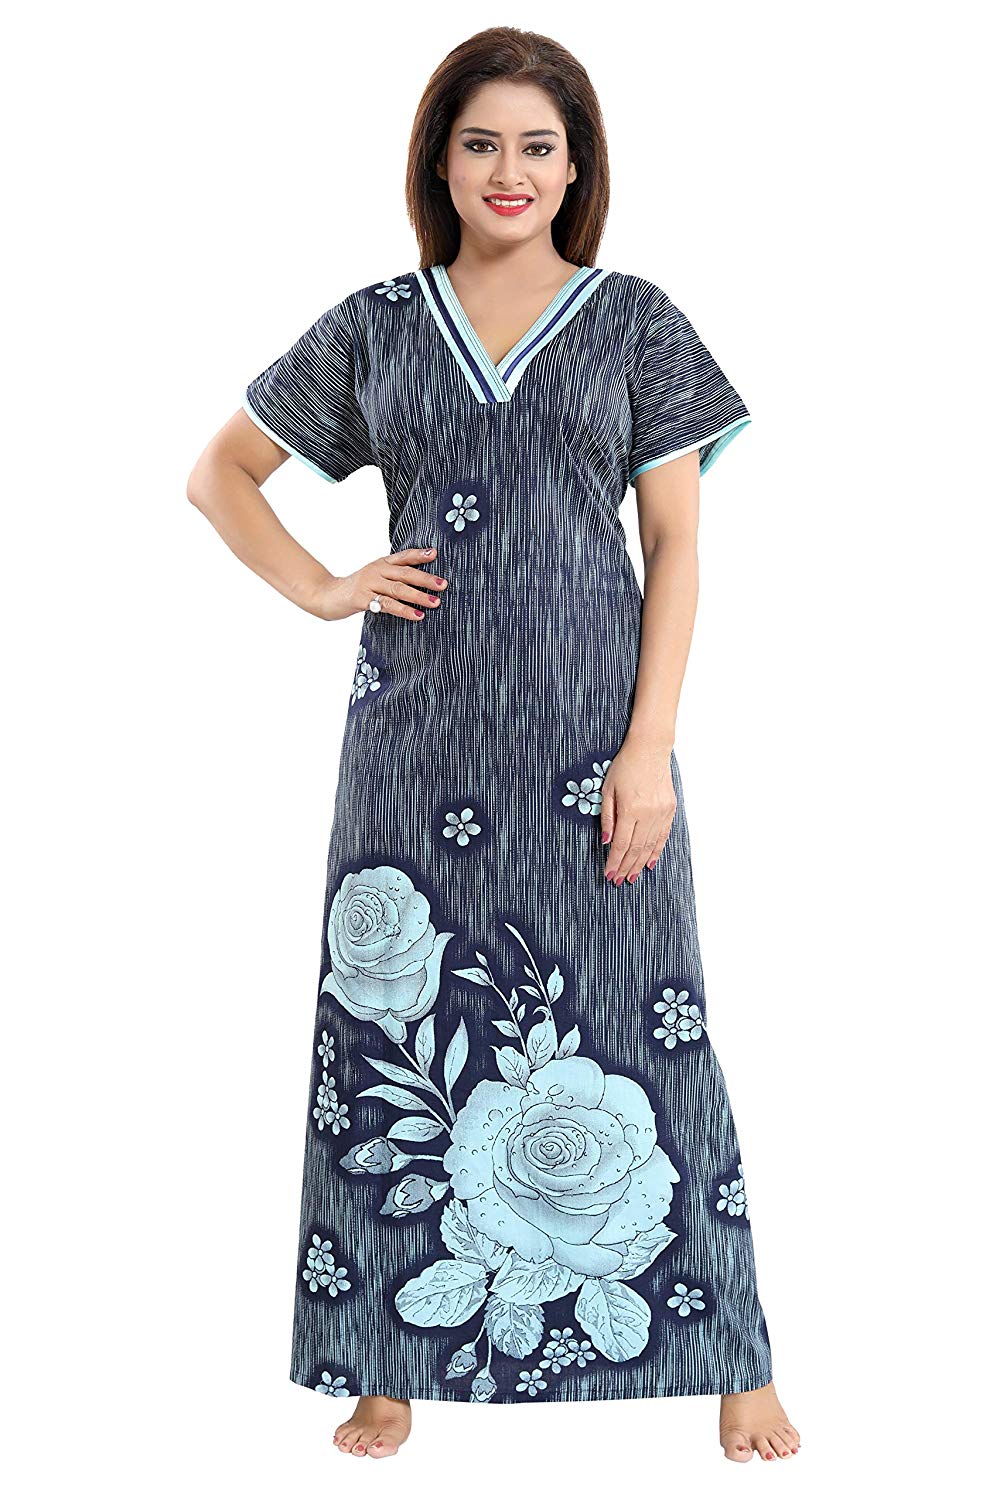 Women's 100% Cotton Short Sleeve Nightie Gown Night Sleepwear Indian Maxi  Dress | eBay